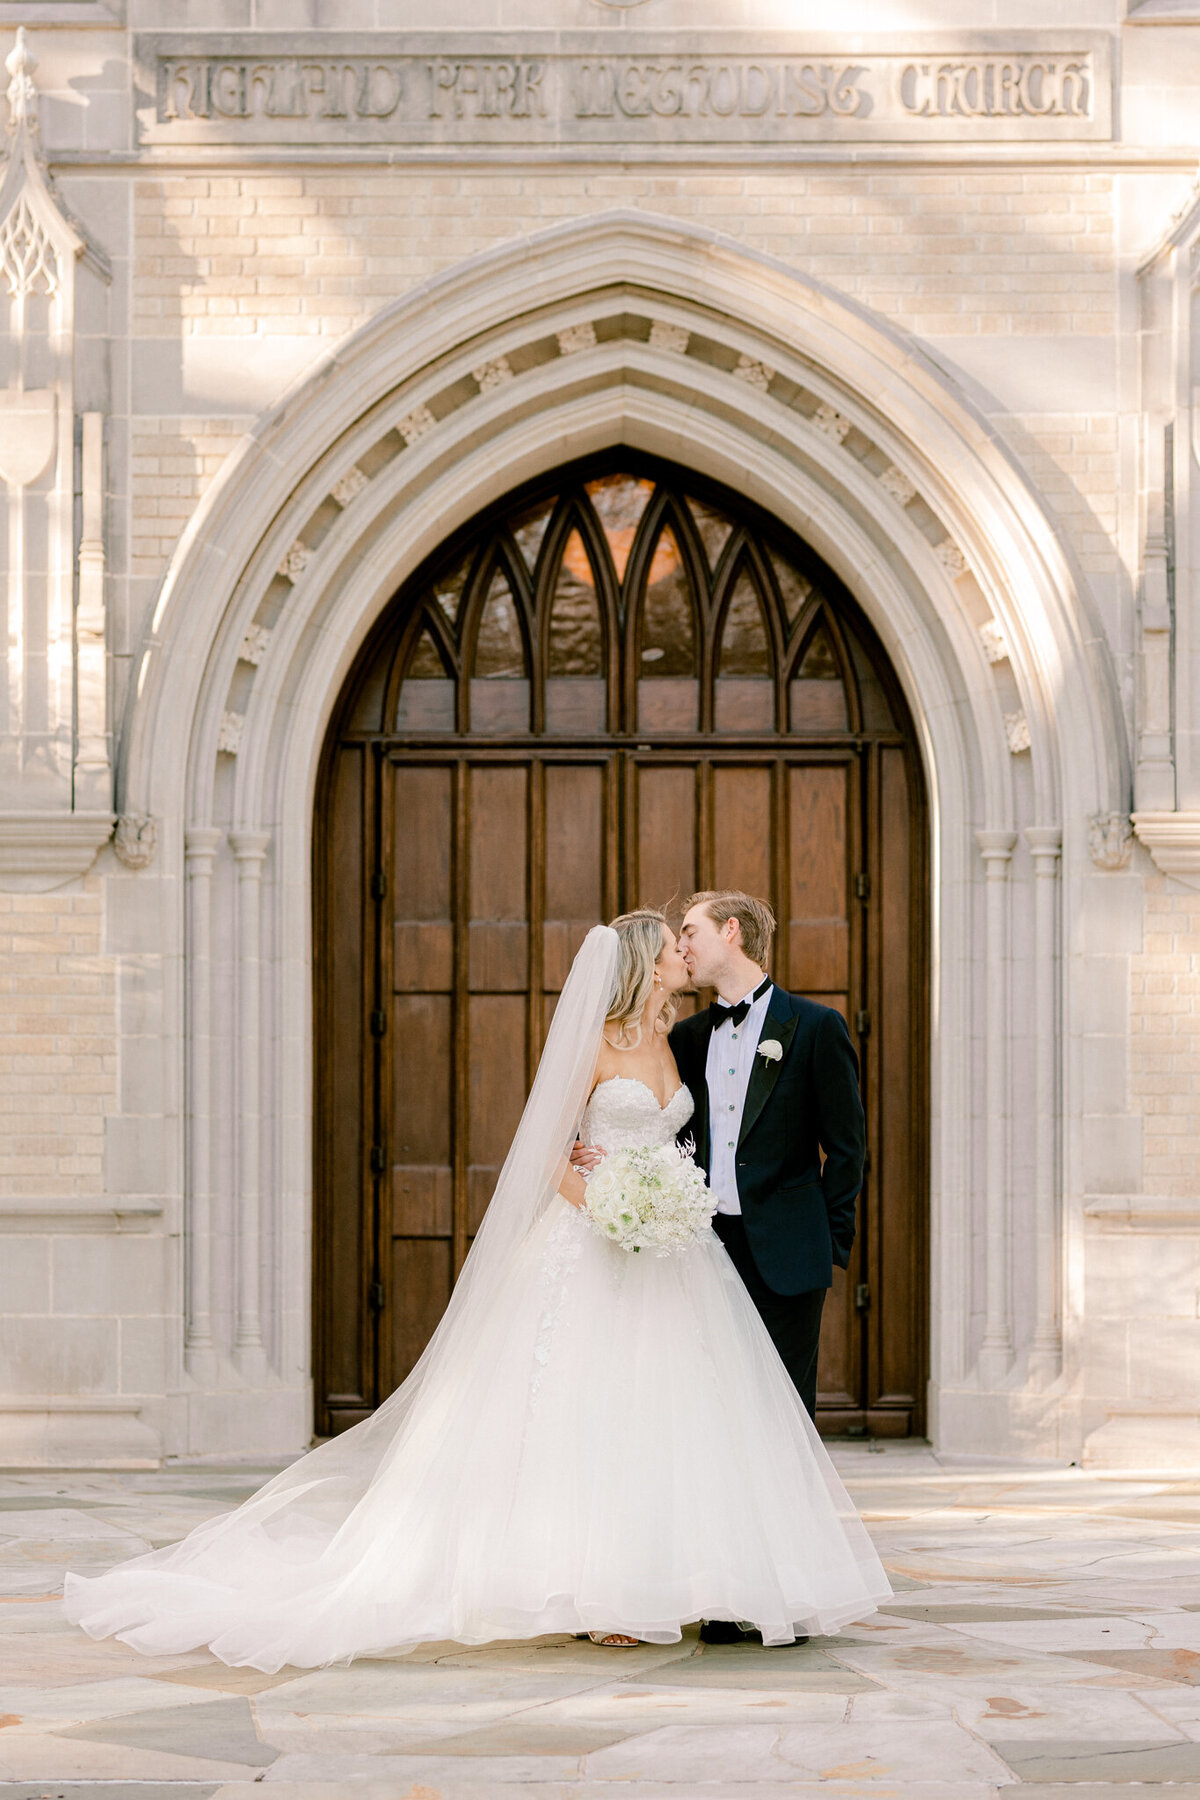 Shelby & Thomas's Wedding at HPUMC The Room on Main | Dallas Wedding Photographer | Sami Kathryn Photography-156